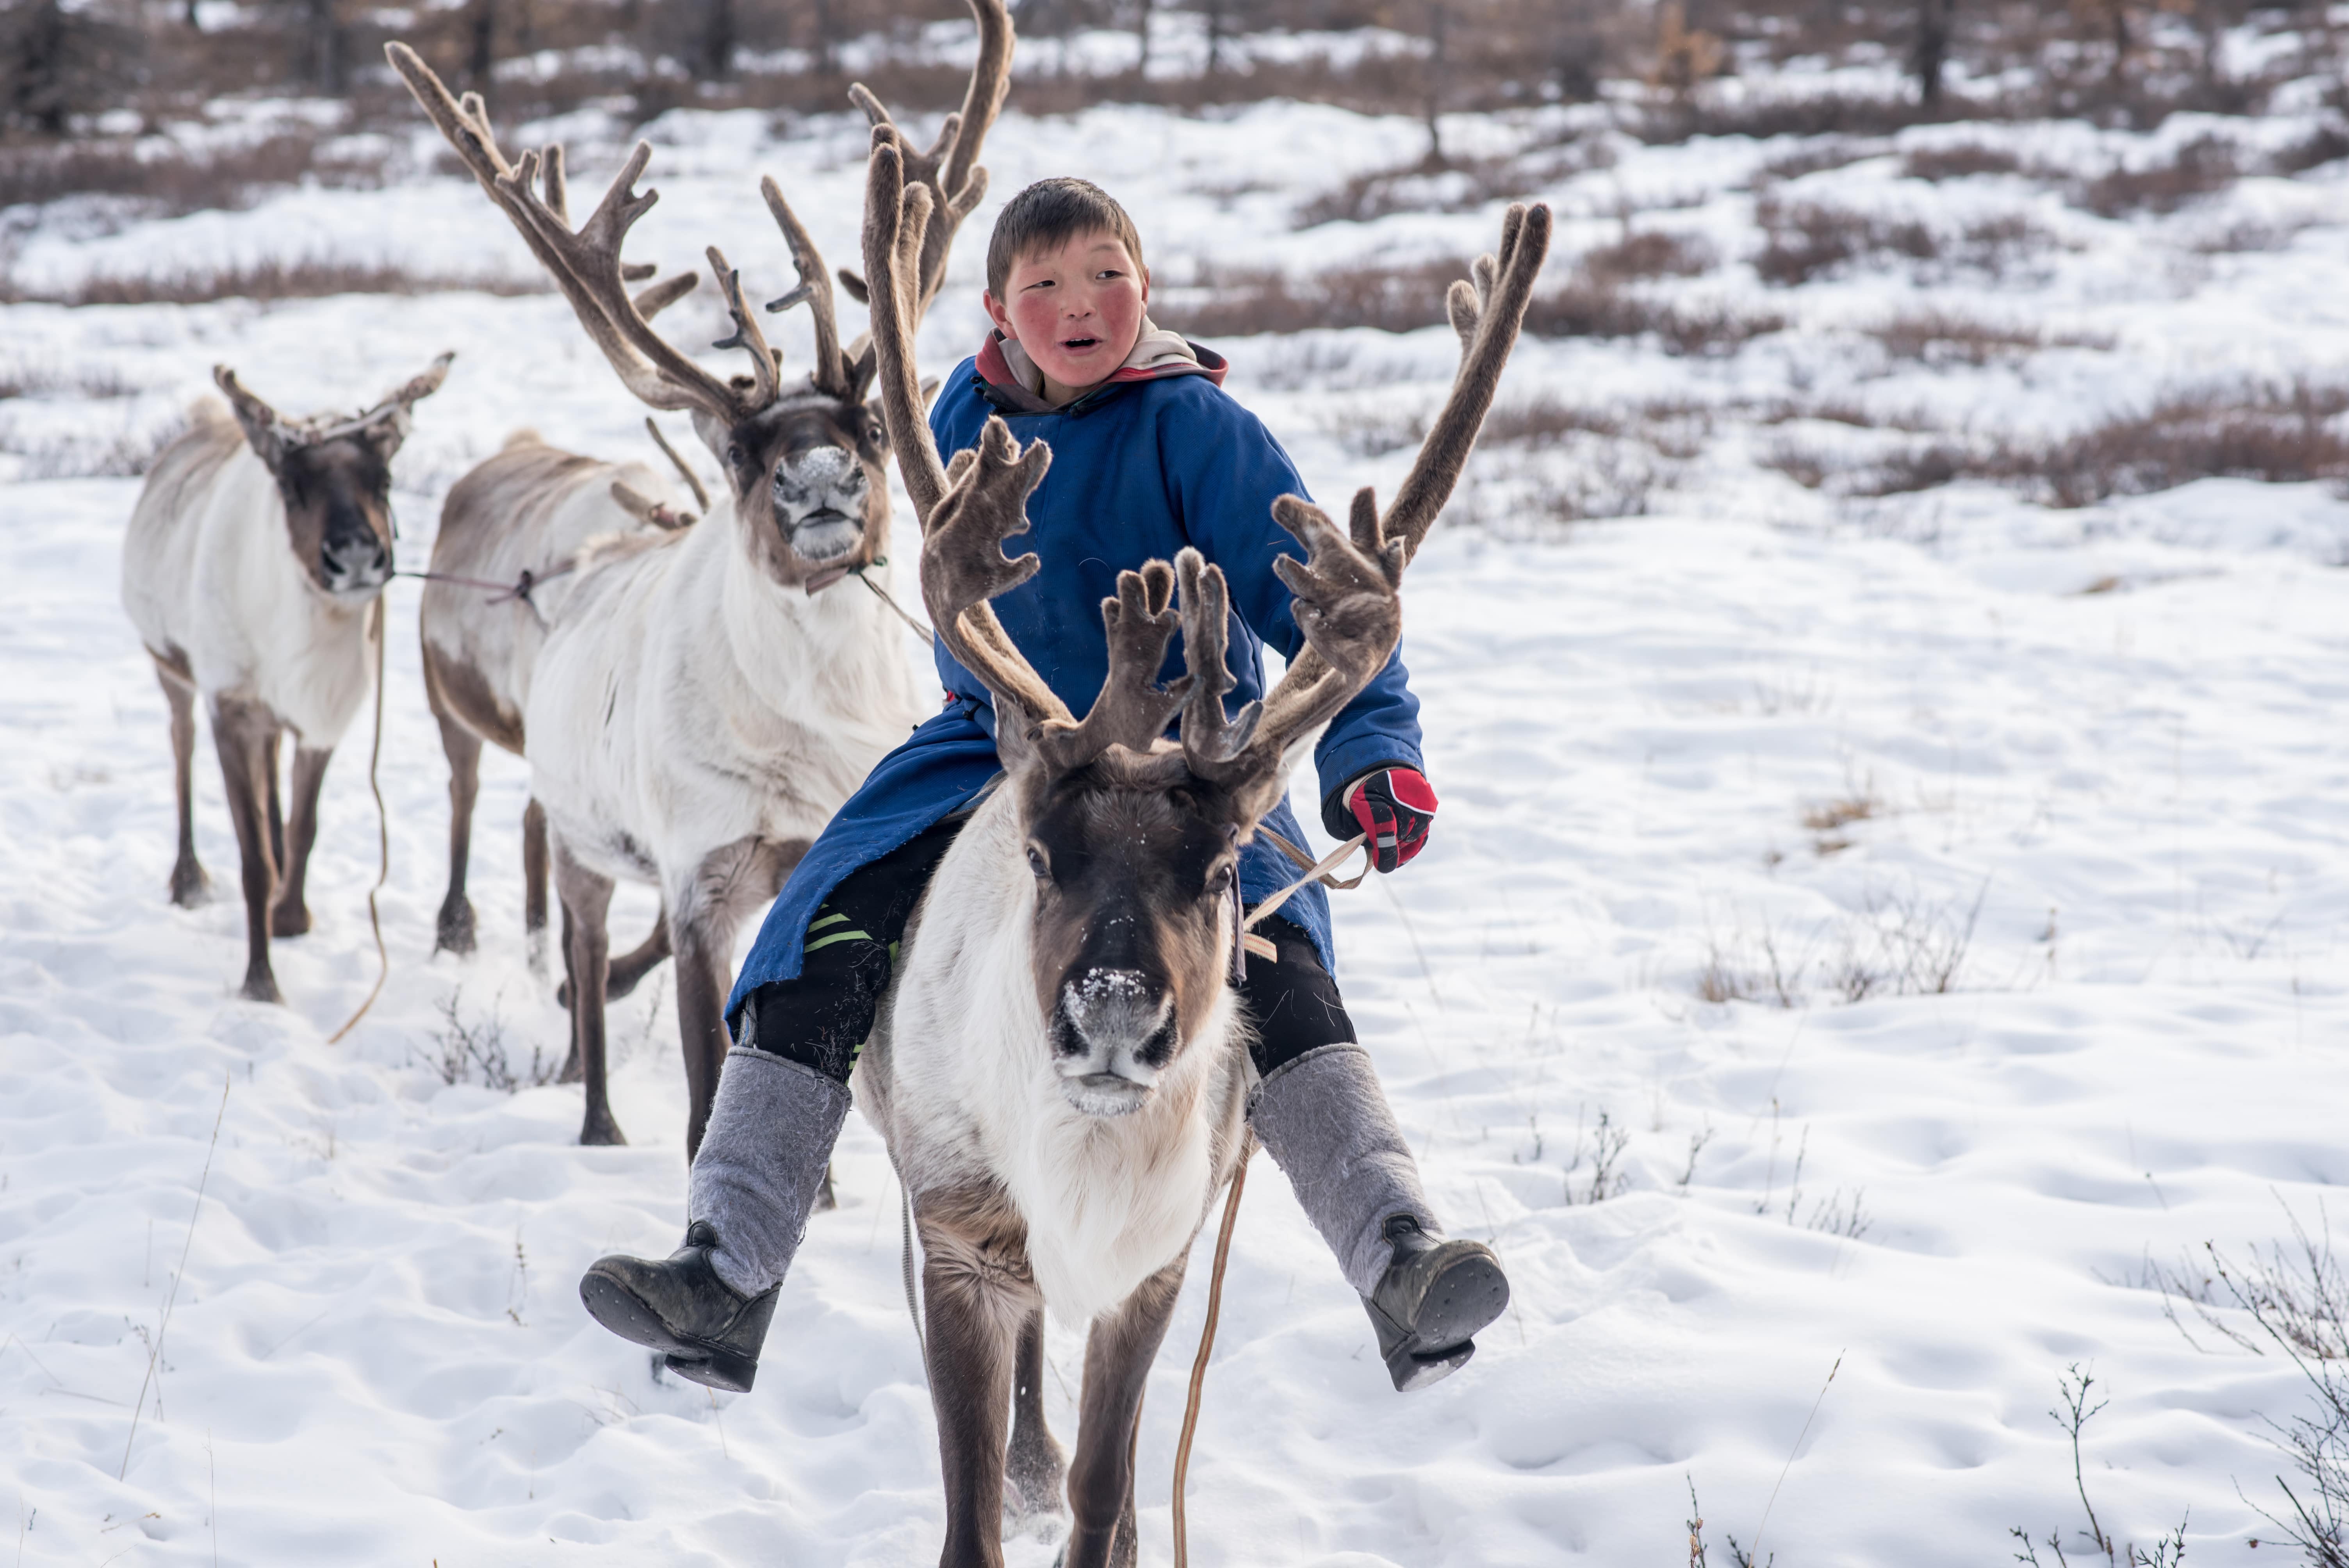 mongolian-reindeer-traditionally-tsaatan-family-their-reindeers-taiga-mongolia-min.jpg